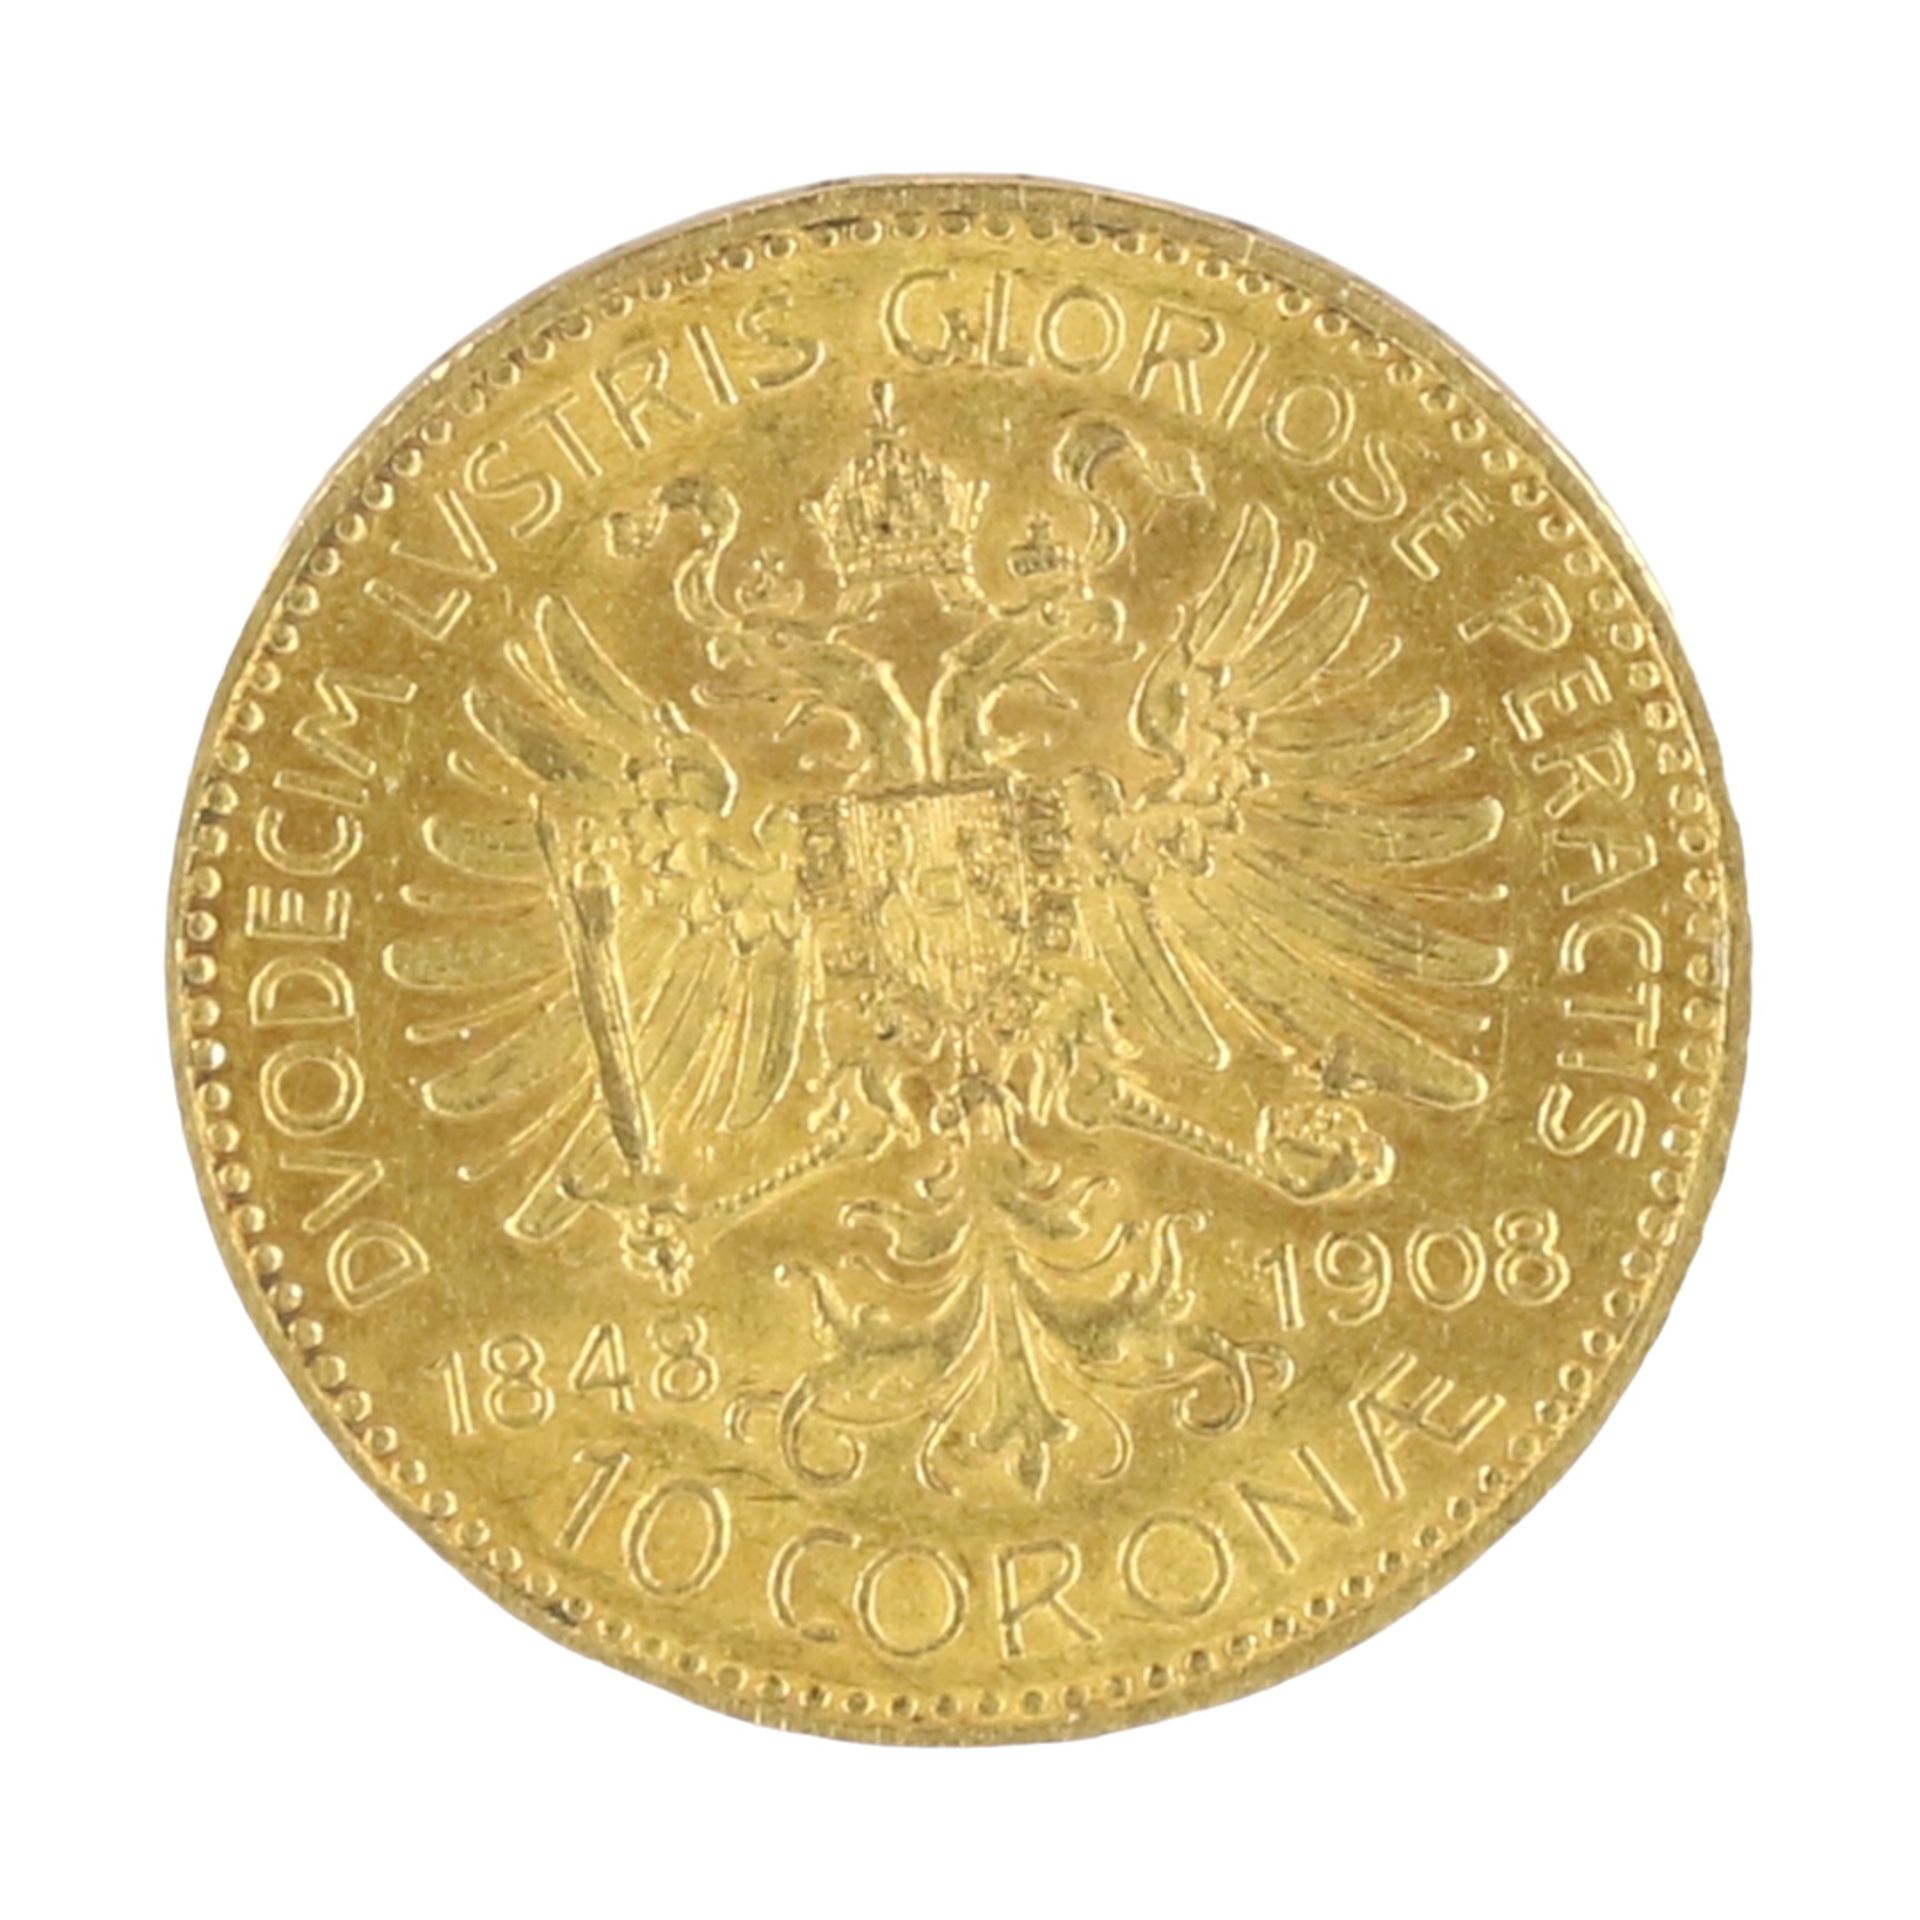 10 kronen Austria, gold coin, 1908 - Image 2 of 2